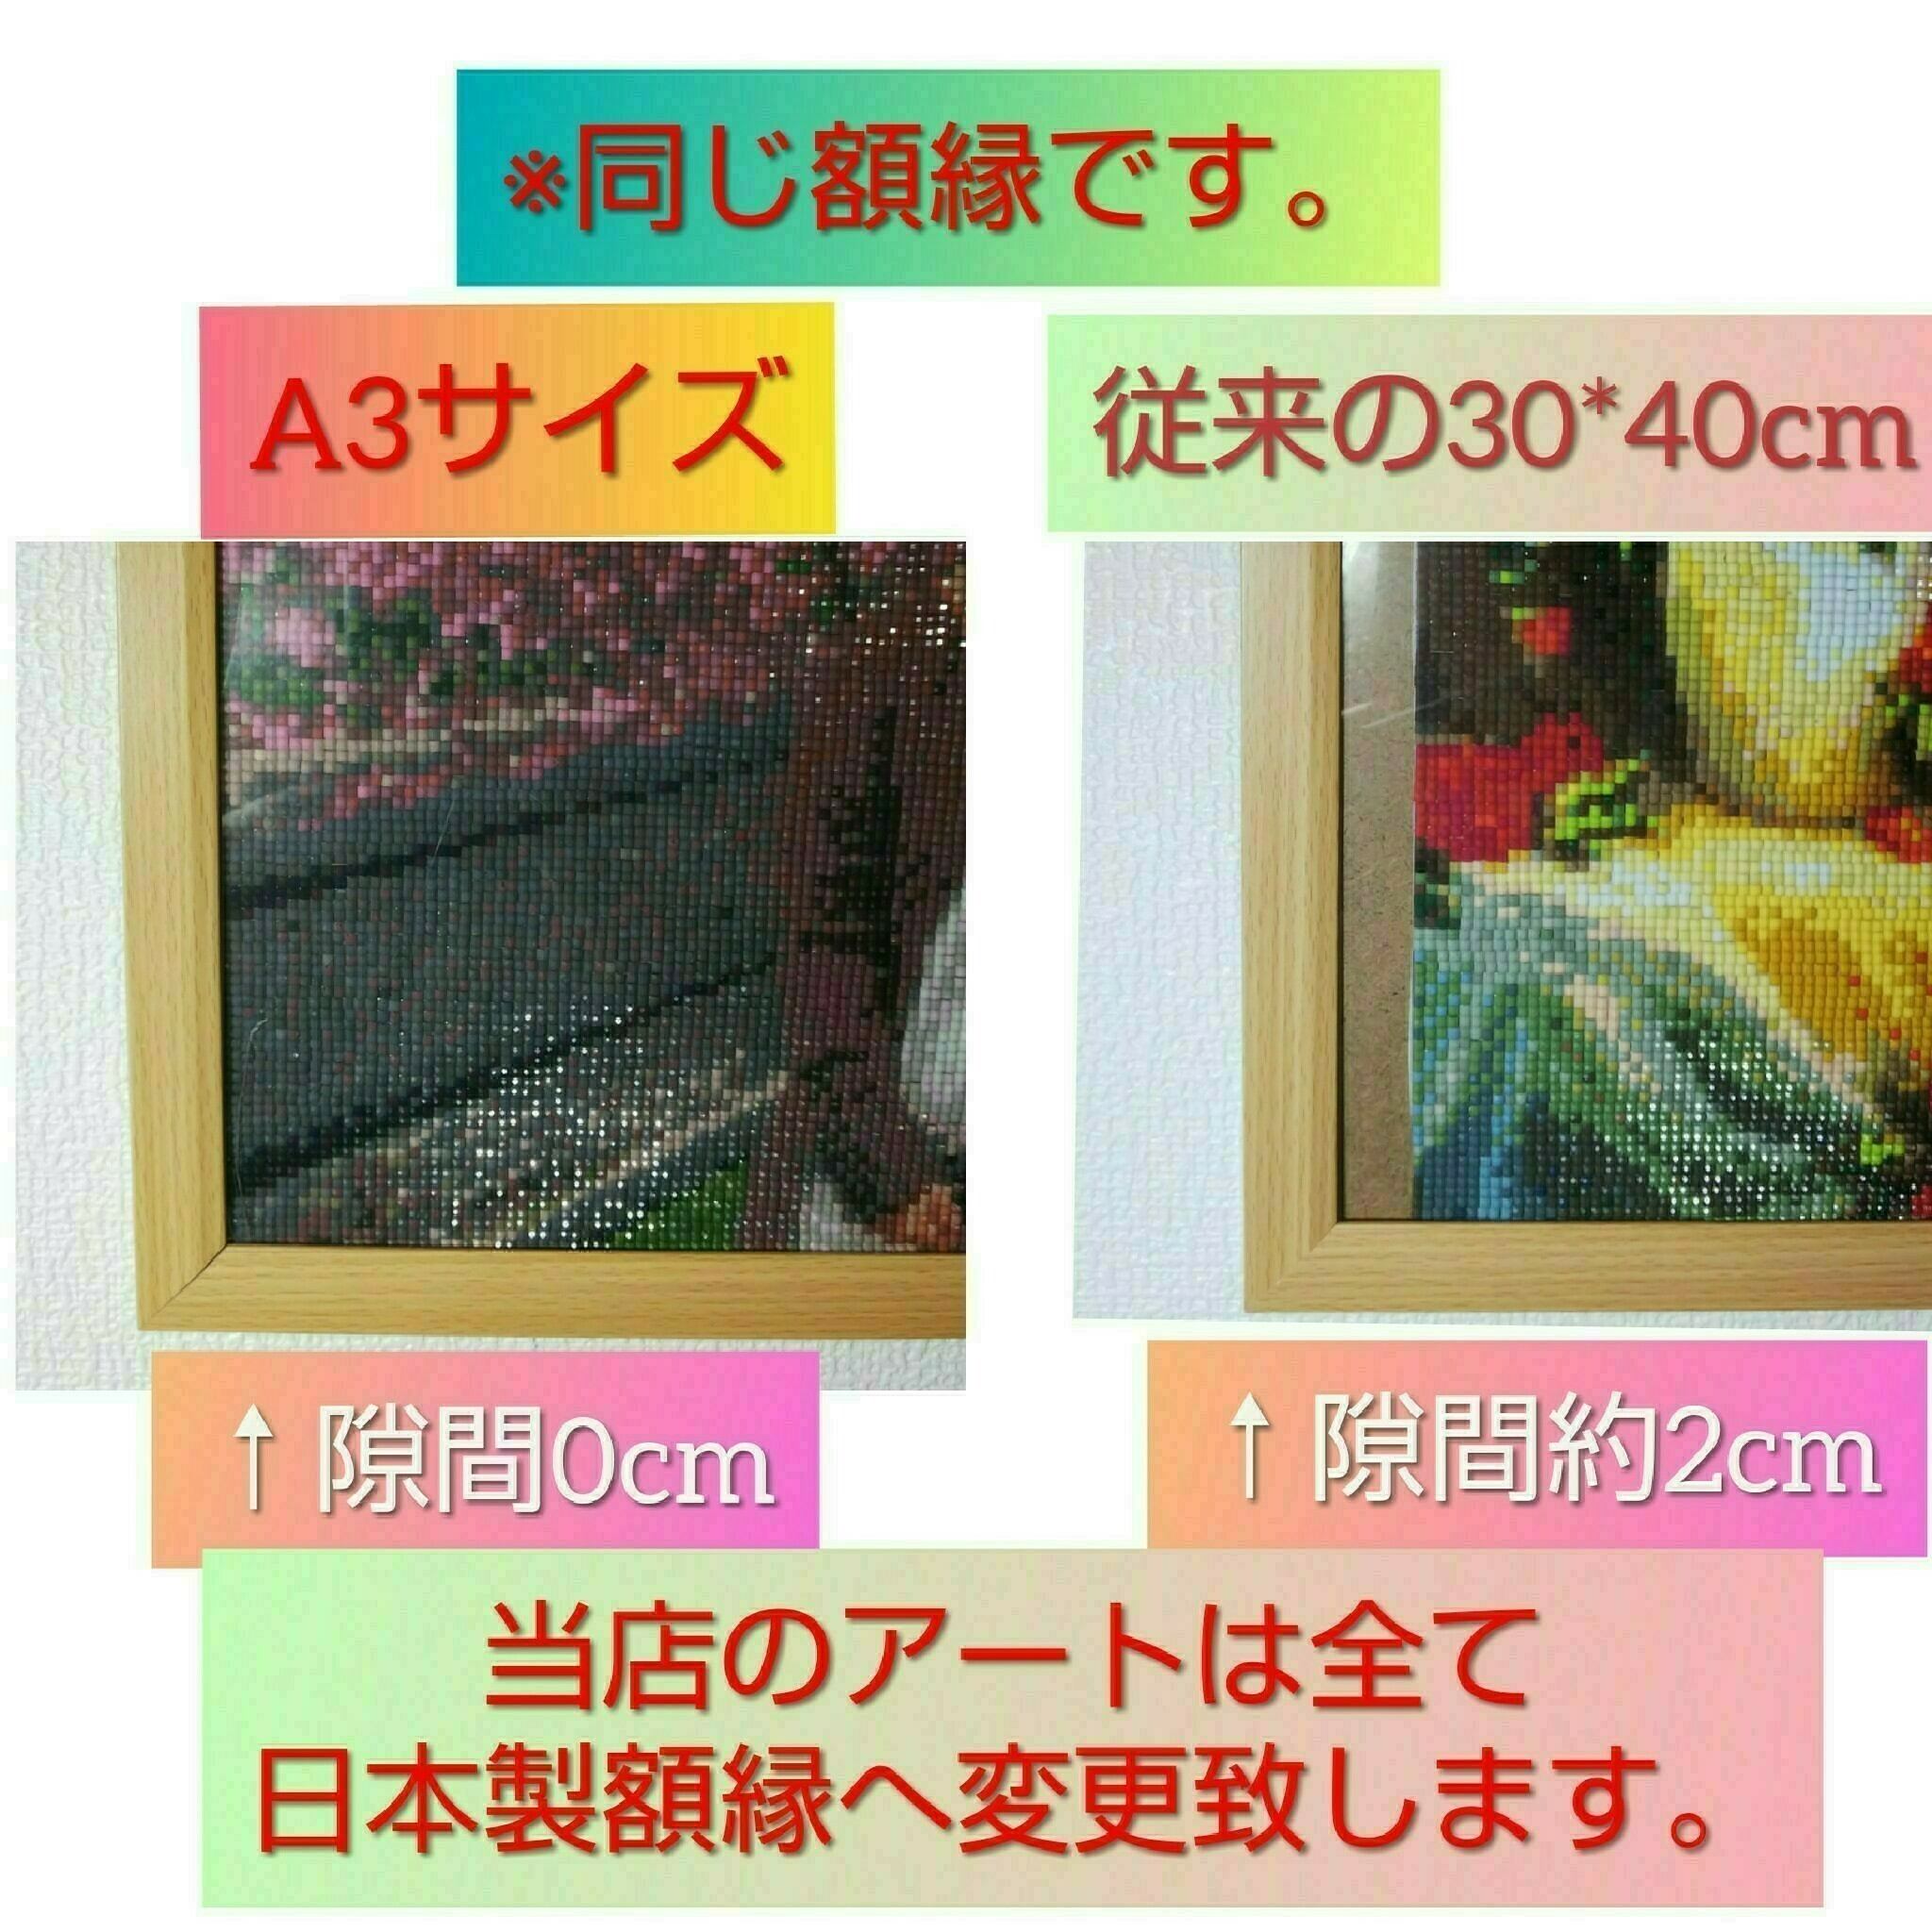 A3サイズ 四角ビーズ【runa-575】ダイヤモンドアート